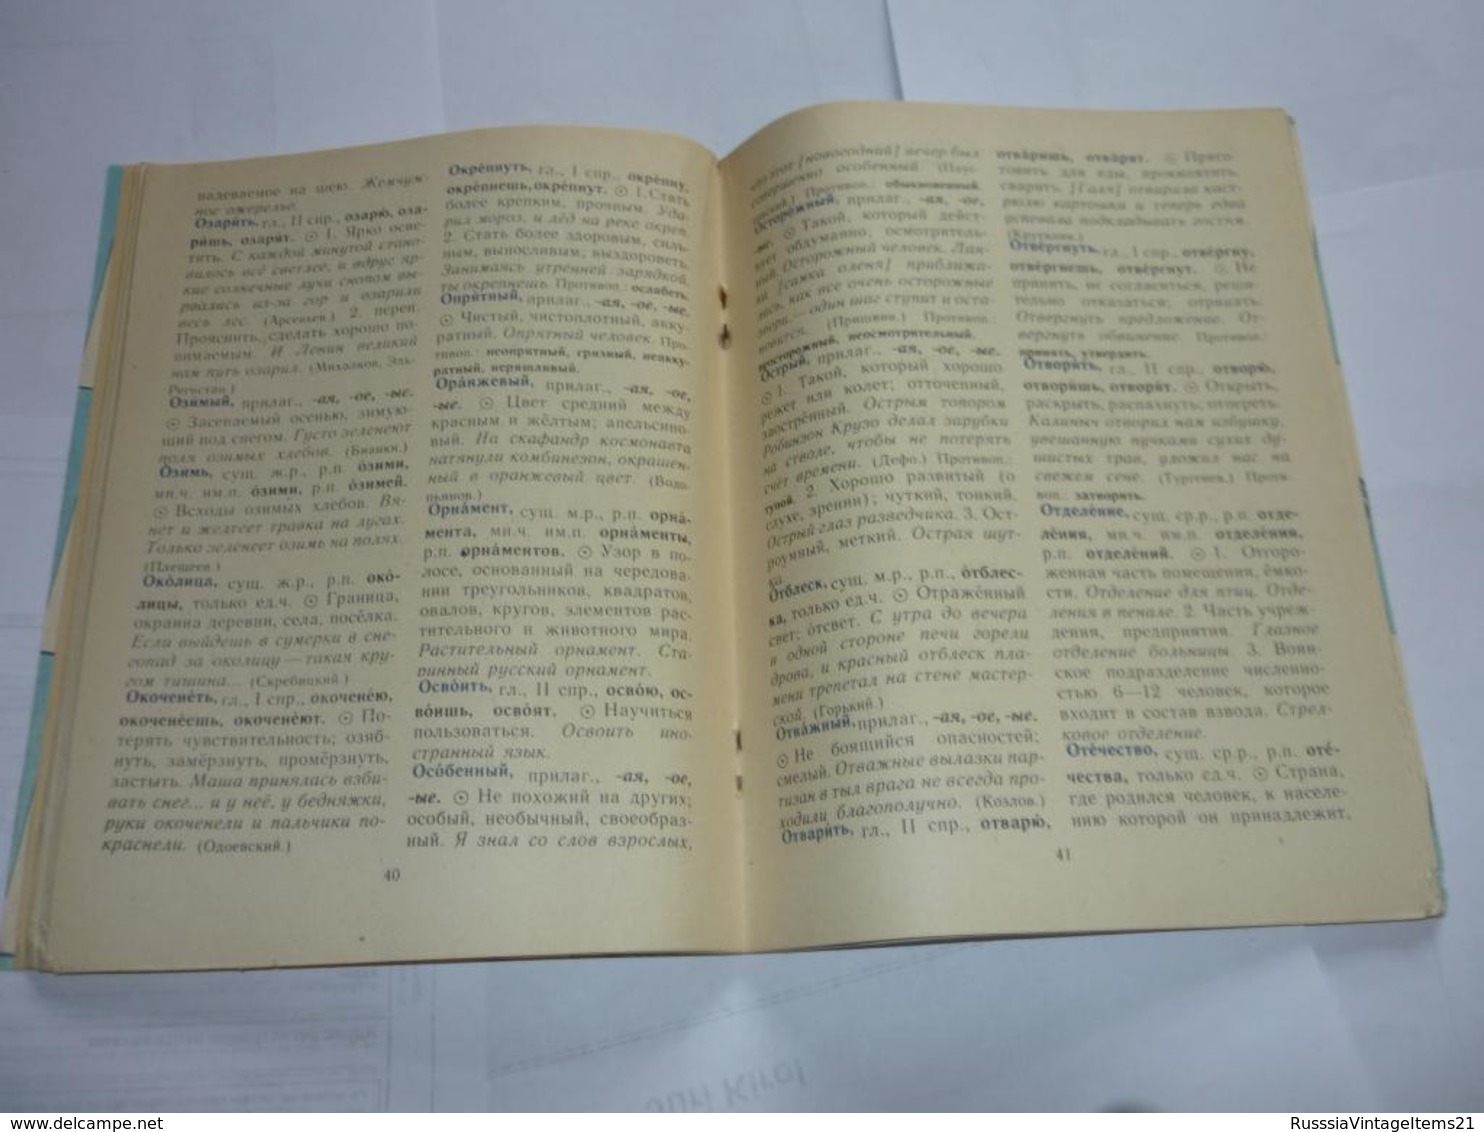 Neusypova N. - Explanatory dictionary of the Russian language